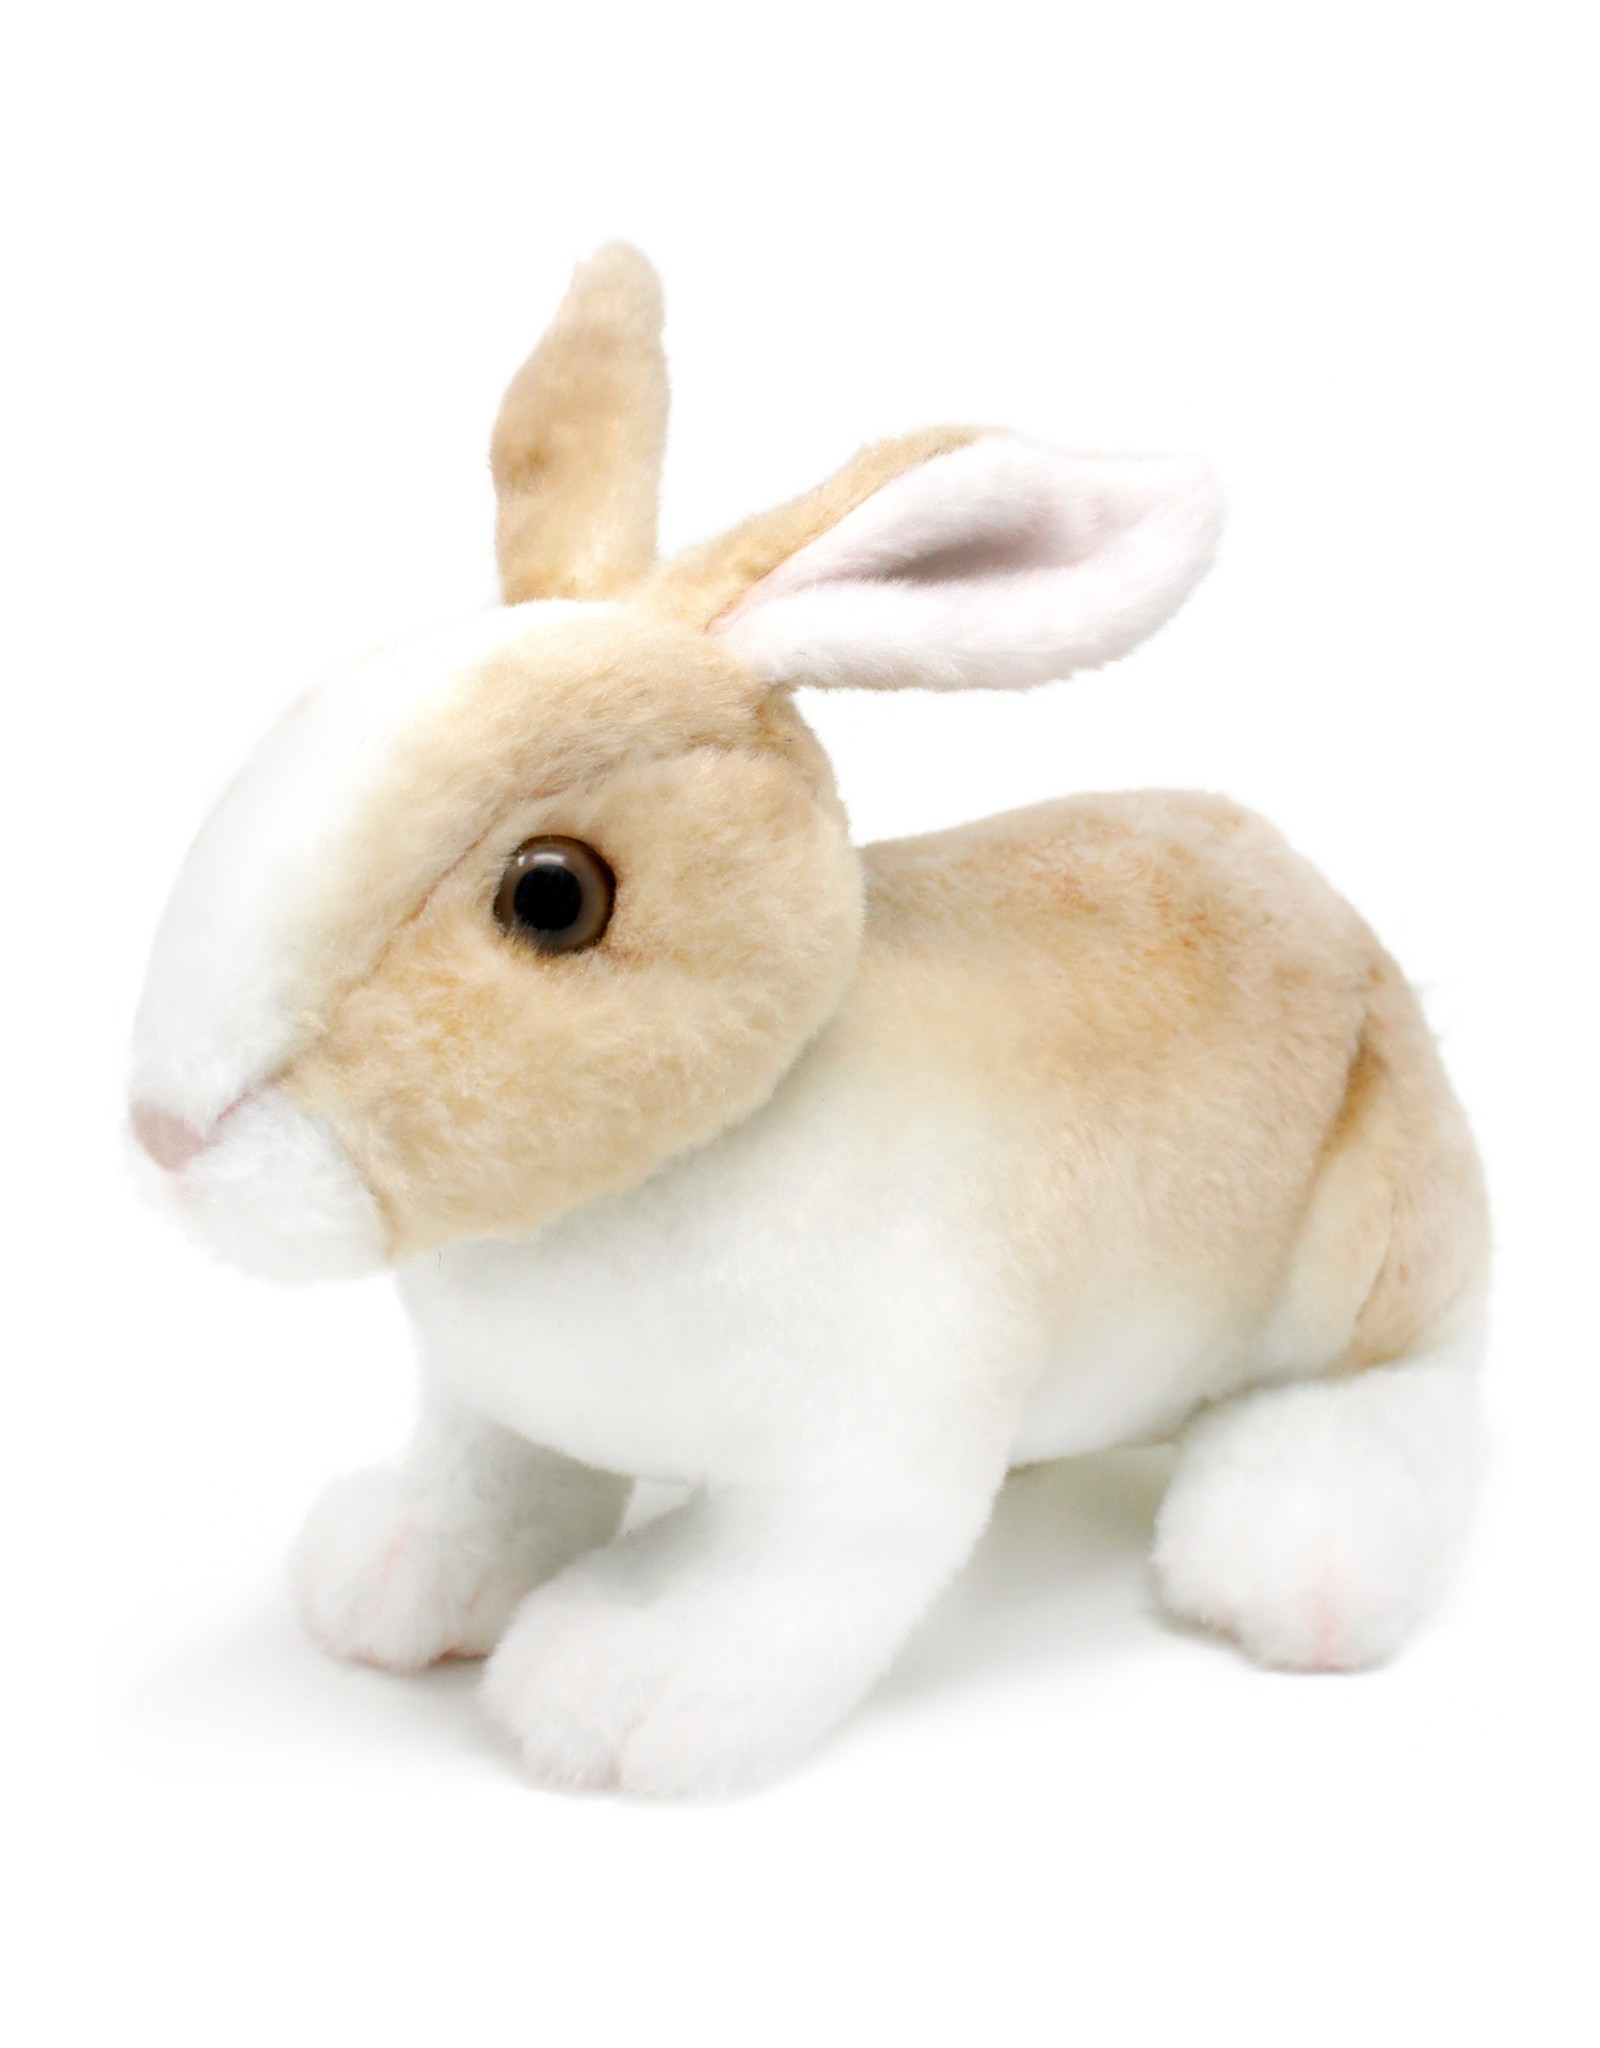 Viahart Ridley The Rabbit Plush